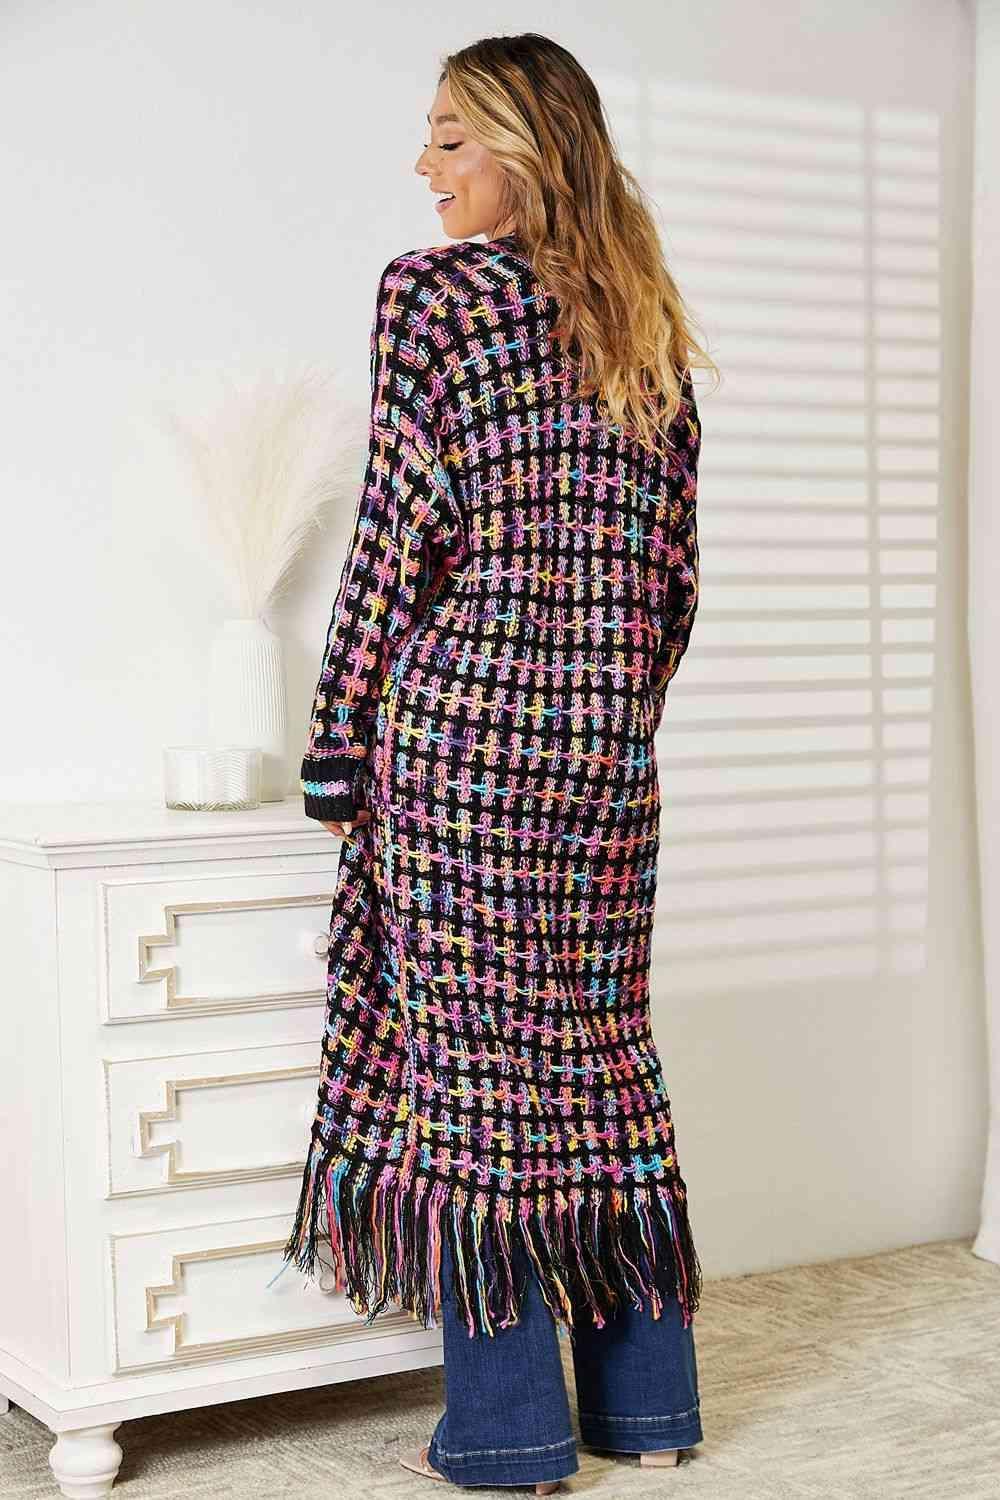 Bona Fide Fashion - Full Size Multicolored Open Front Fringe Hem Cardigan - Women Fashion - Bona Fide Fashion